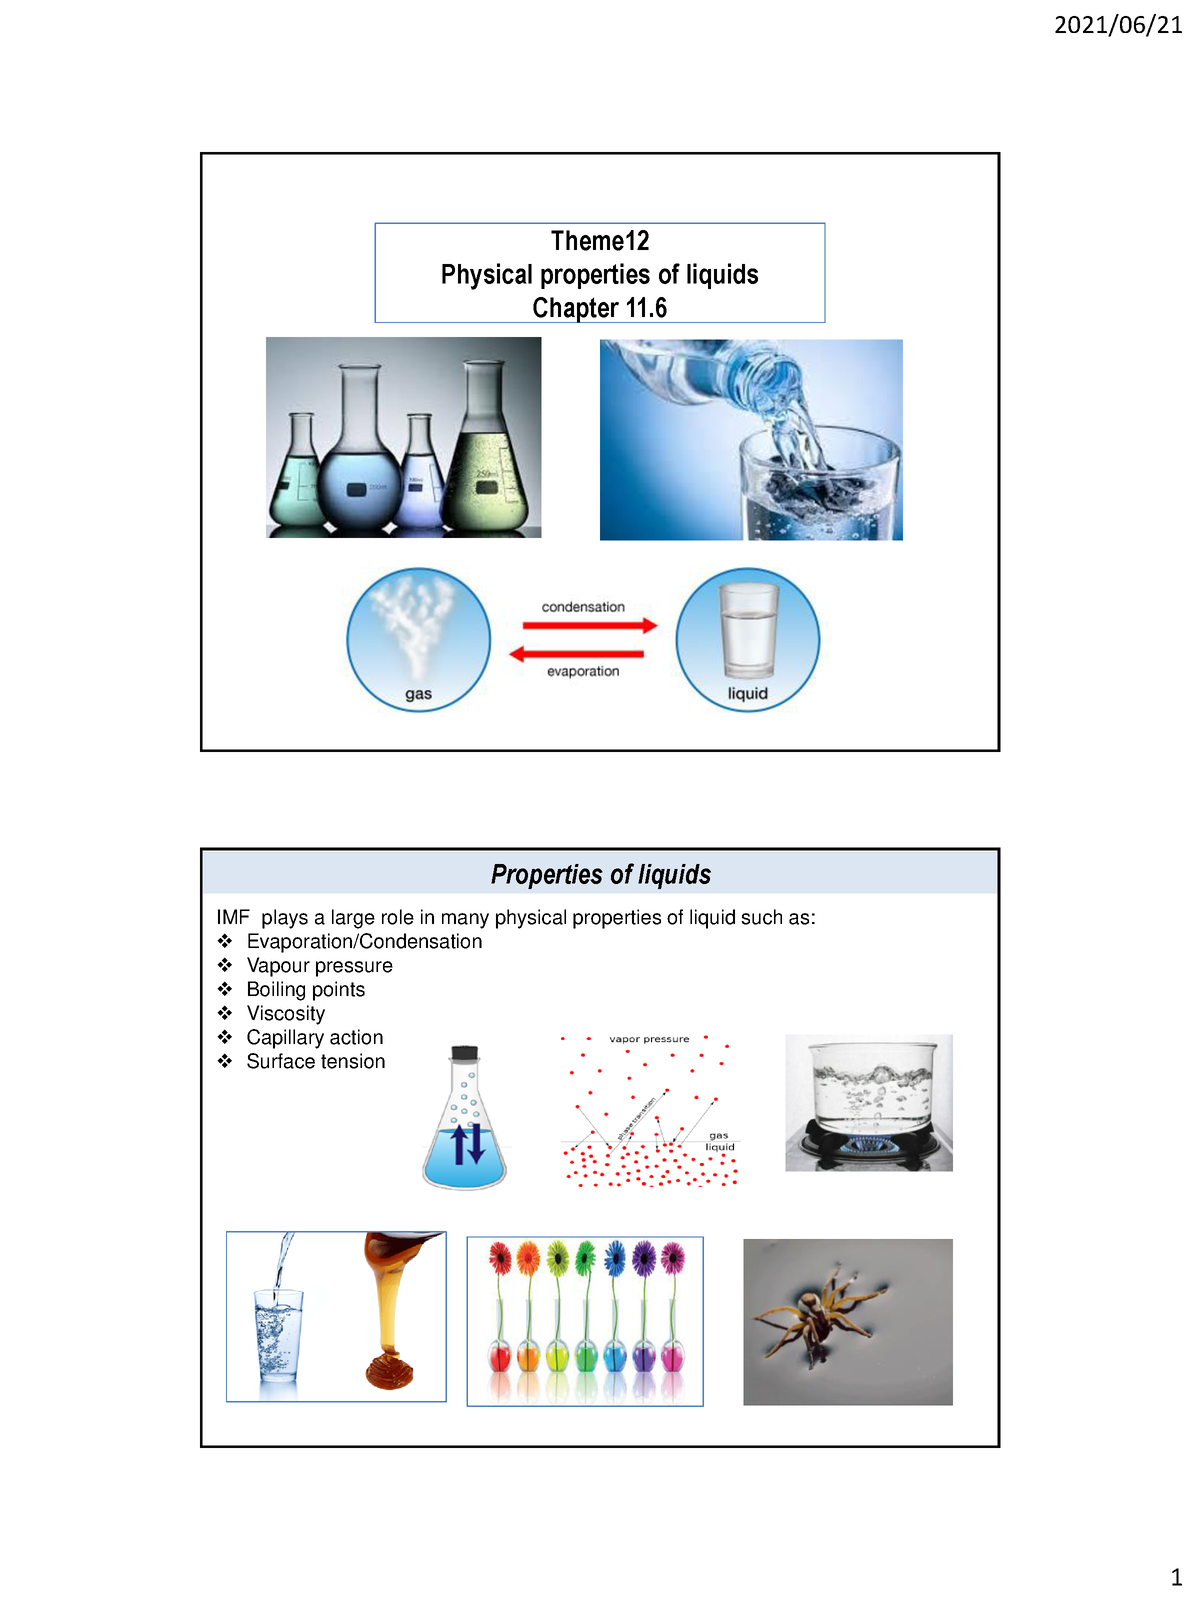 Theme 12 Physical properties of liquids - Theme Physical properties of ...